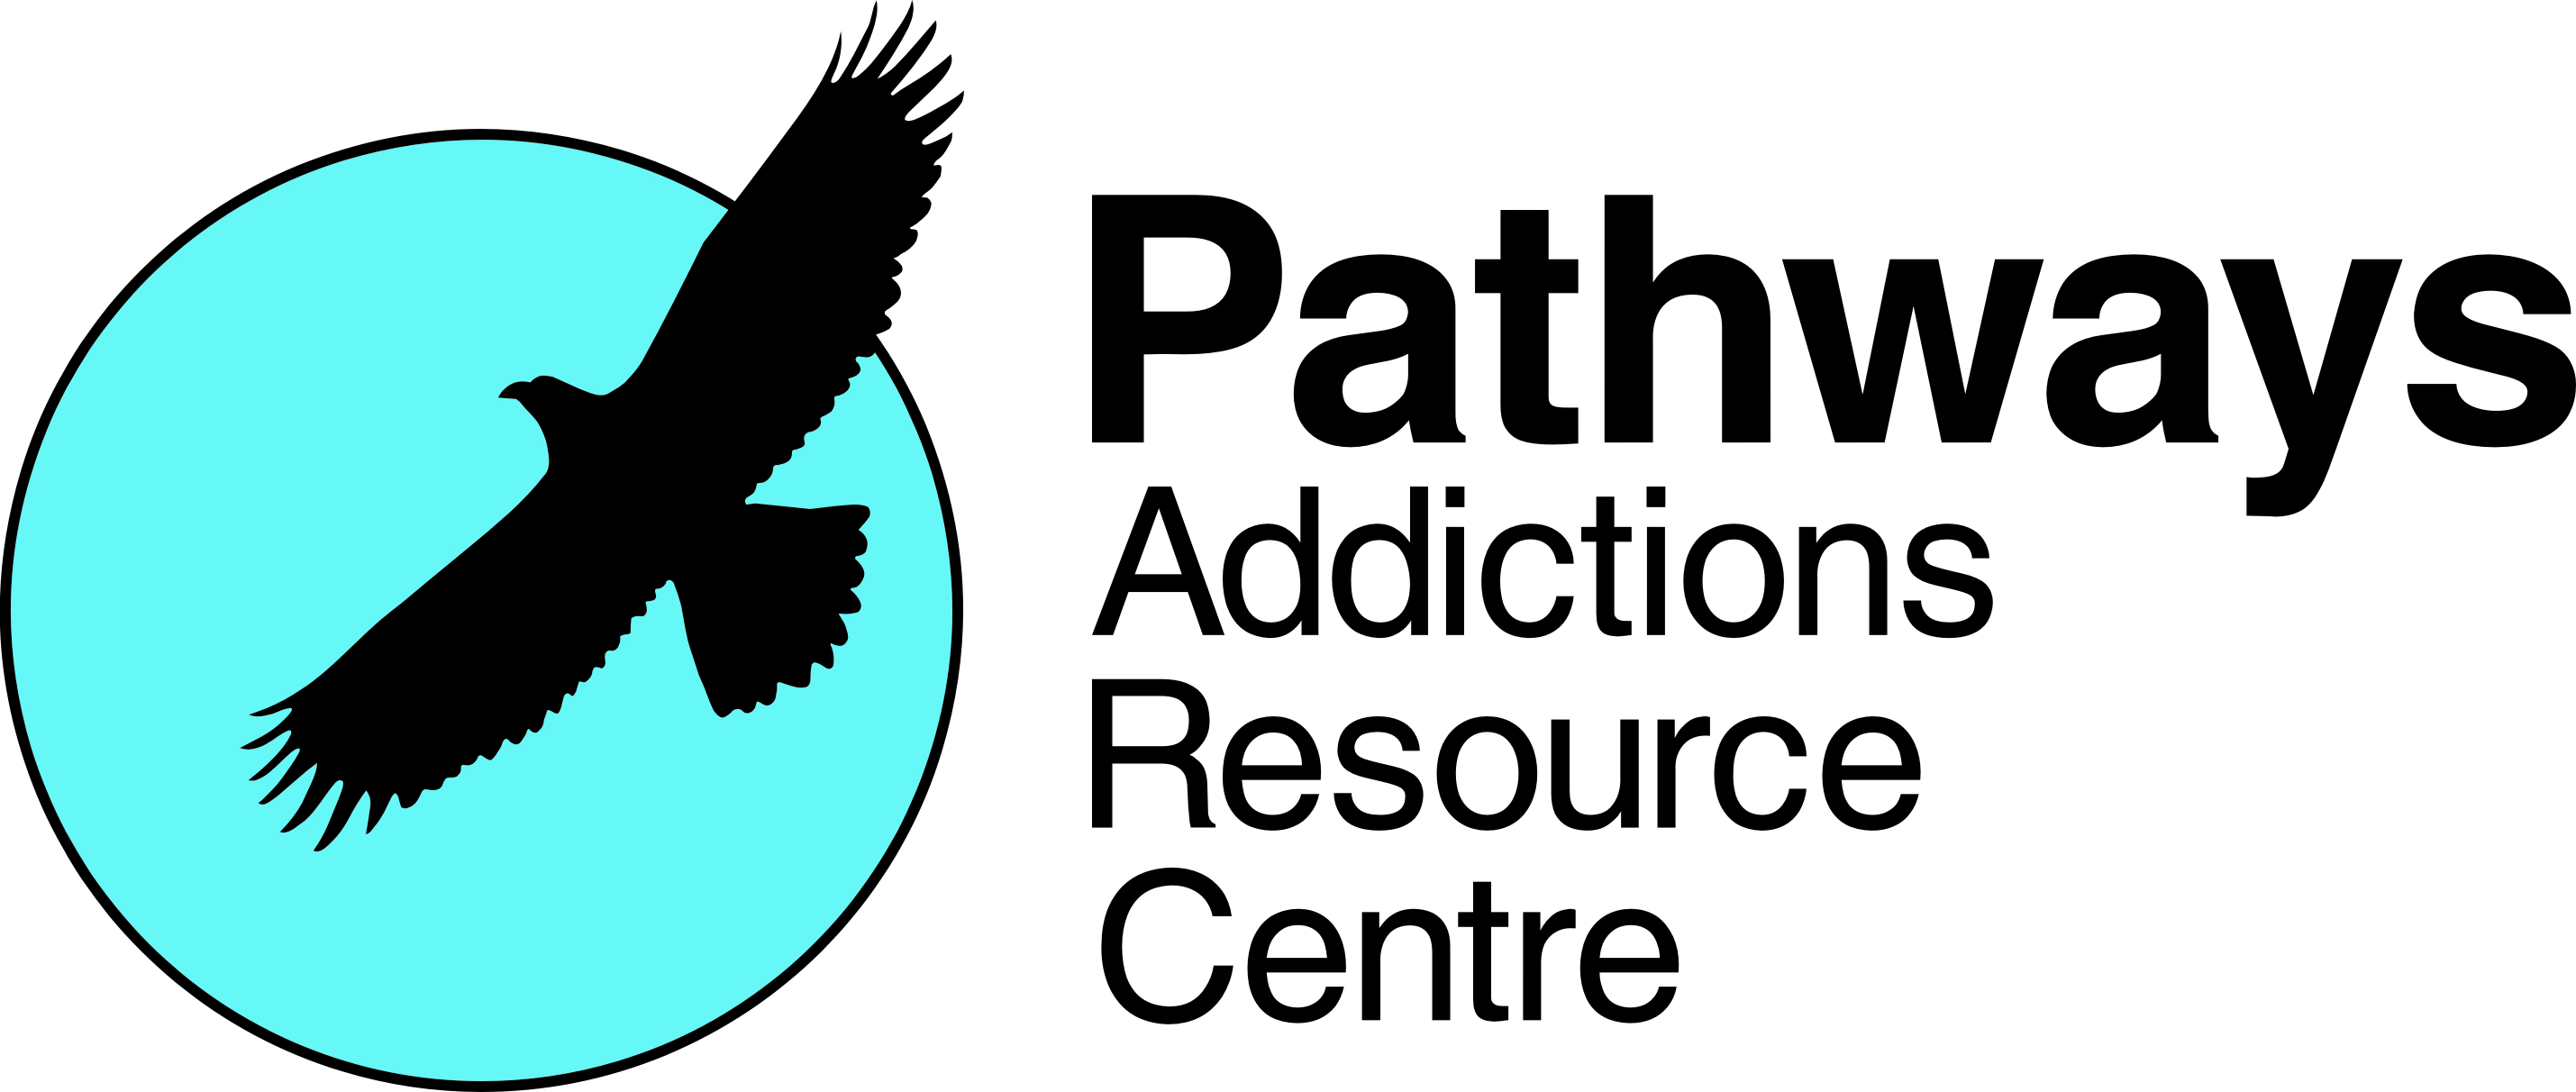 PATHWAYS: ADDICTIONS RESOURCE CENTRE logo